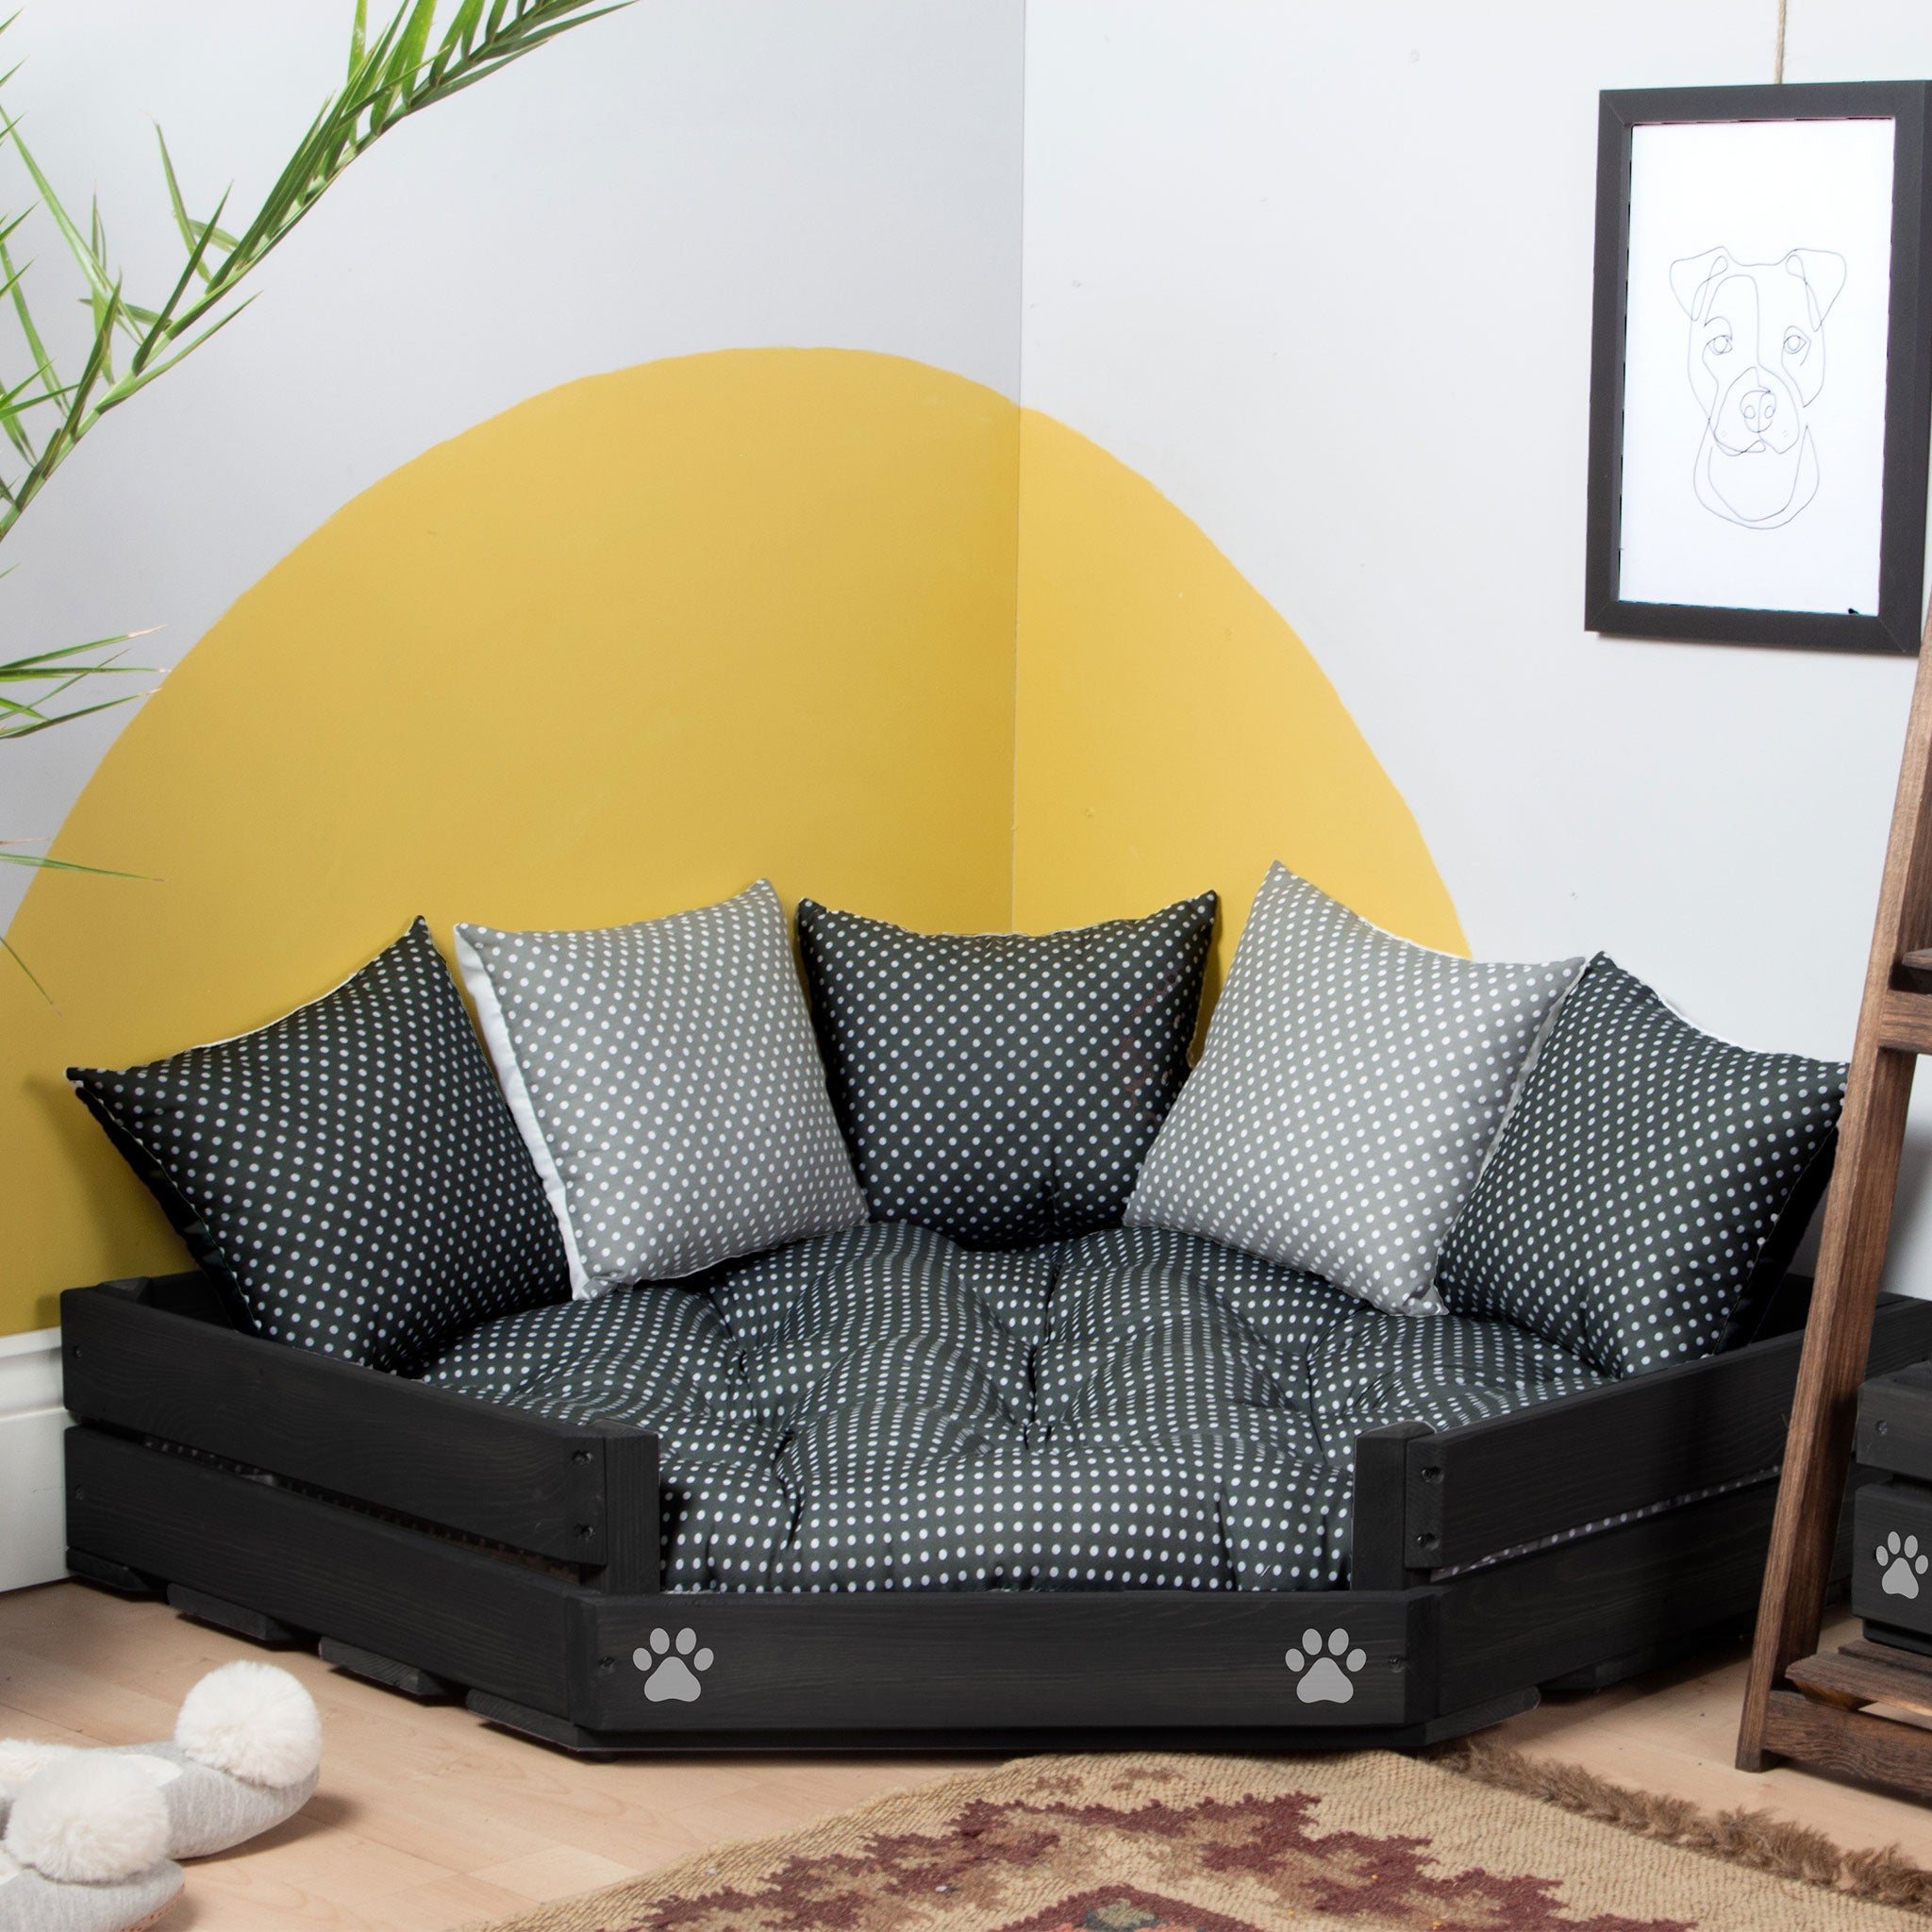 Corner Wooden Personalised Dog Bed (76 x 76cm) - Ebony Black & Black Polka Dot